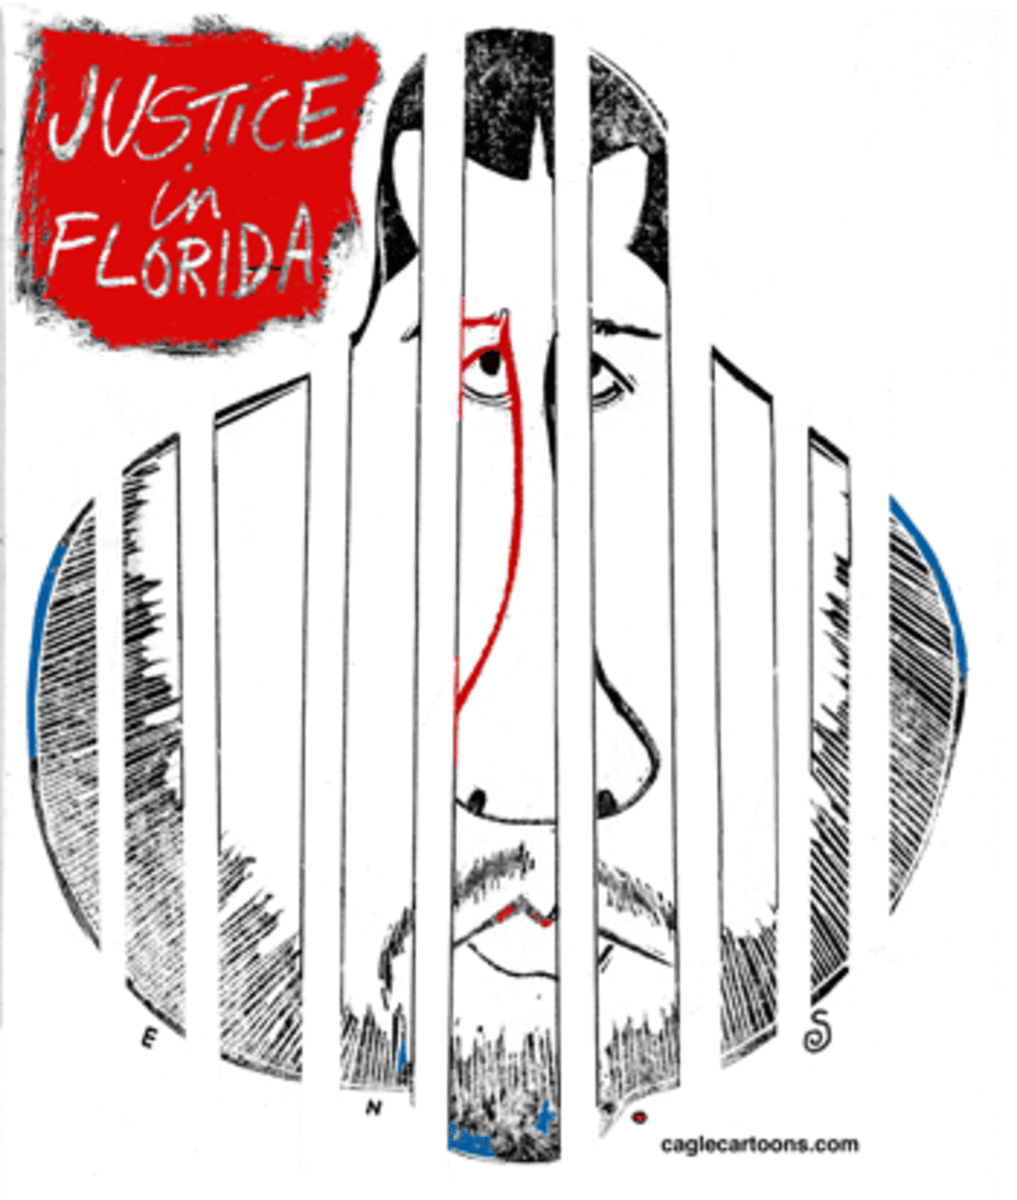 justice in florida